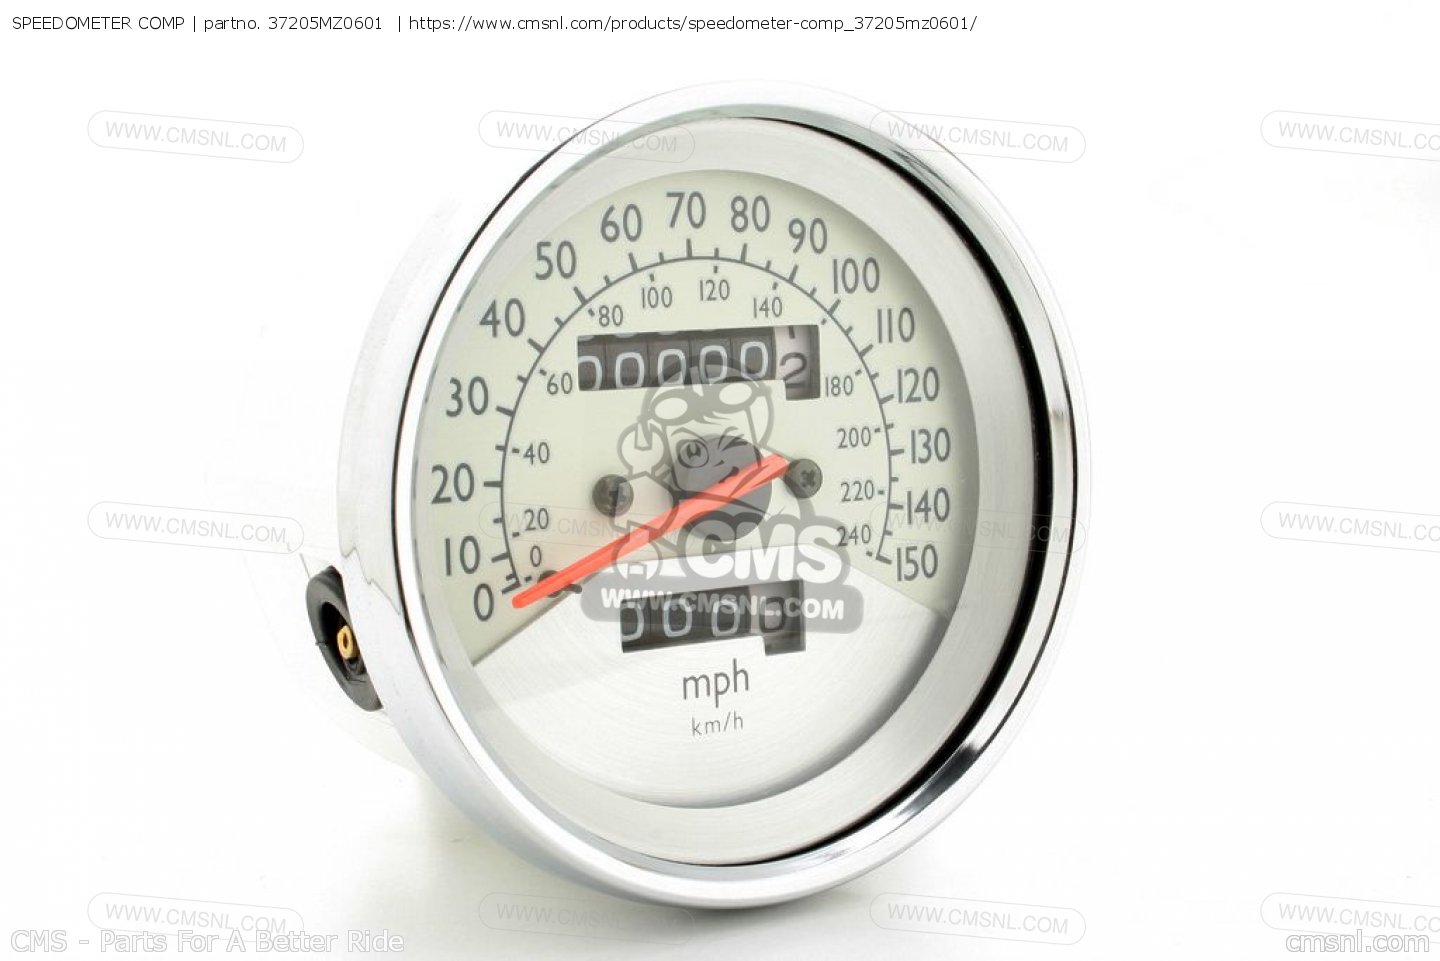 Honda speedometer below peg #1